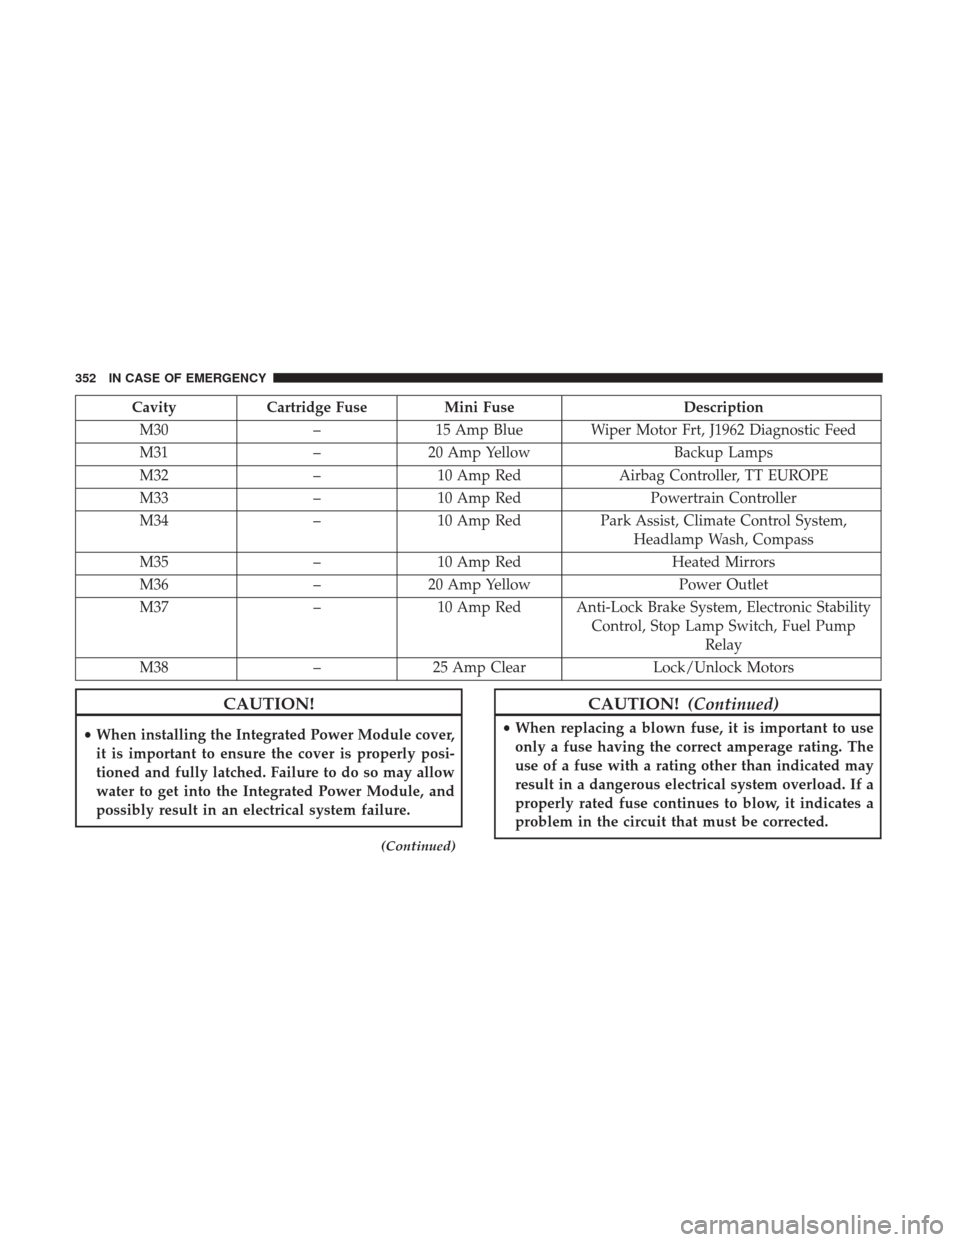 JEEP WRANGLER 2017 JK / 3.G Owners Manual CavityCartridge Fuse Mini Fuse Description
M30 –15 Amp Blue Wiper Motor Frt, J1962 Diagnostic Feed
M31 –20 Amp Yellow Backup Lamps
M32 –10 Amp Red Airbag Controller, TT EUROPE
M33 –10 Amp Red 